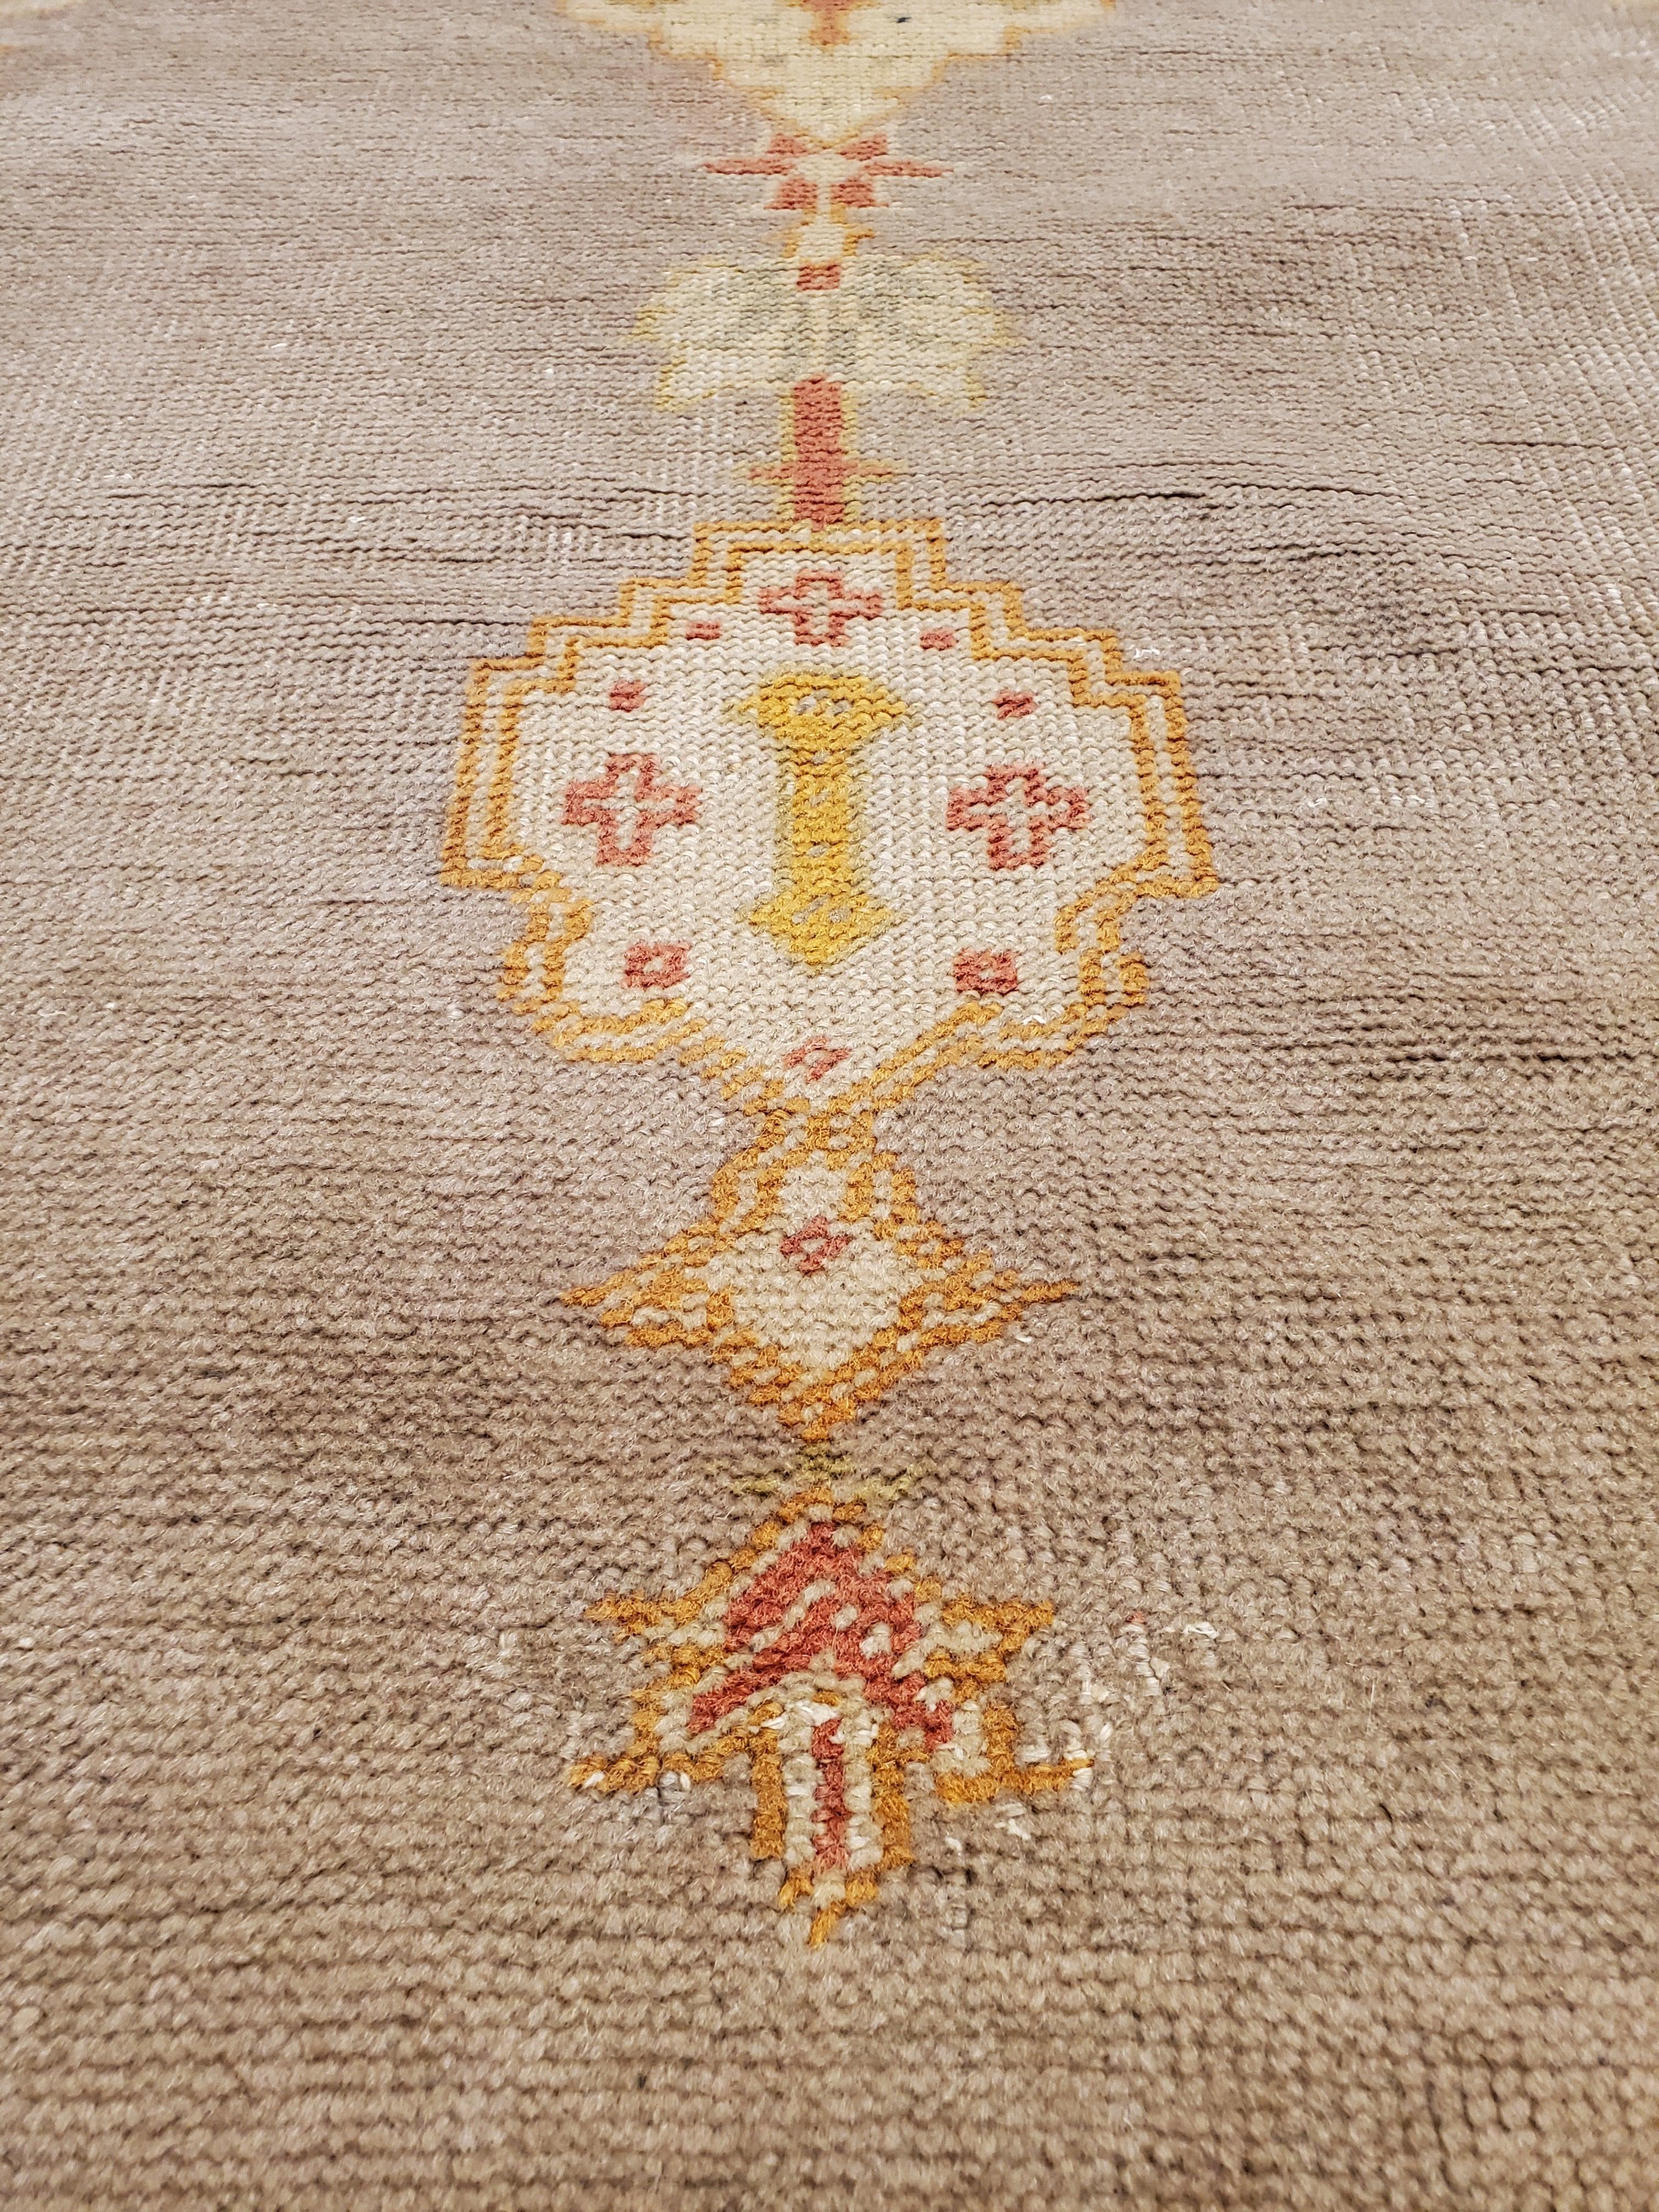 Antique Turkish Oushak Carpet, Handmade Oriental Rug, Gray, Taupe, Saffron Coral 4